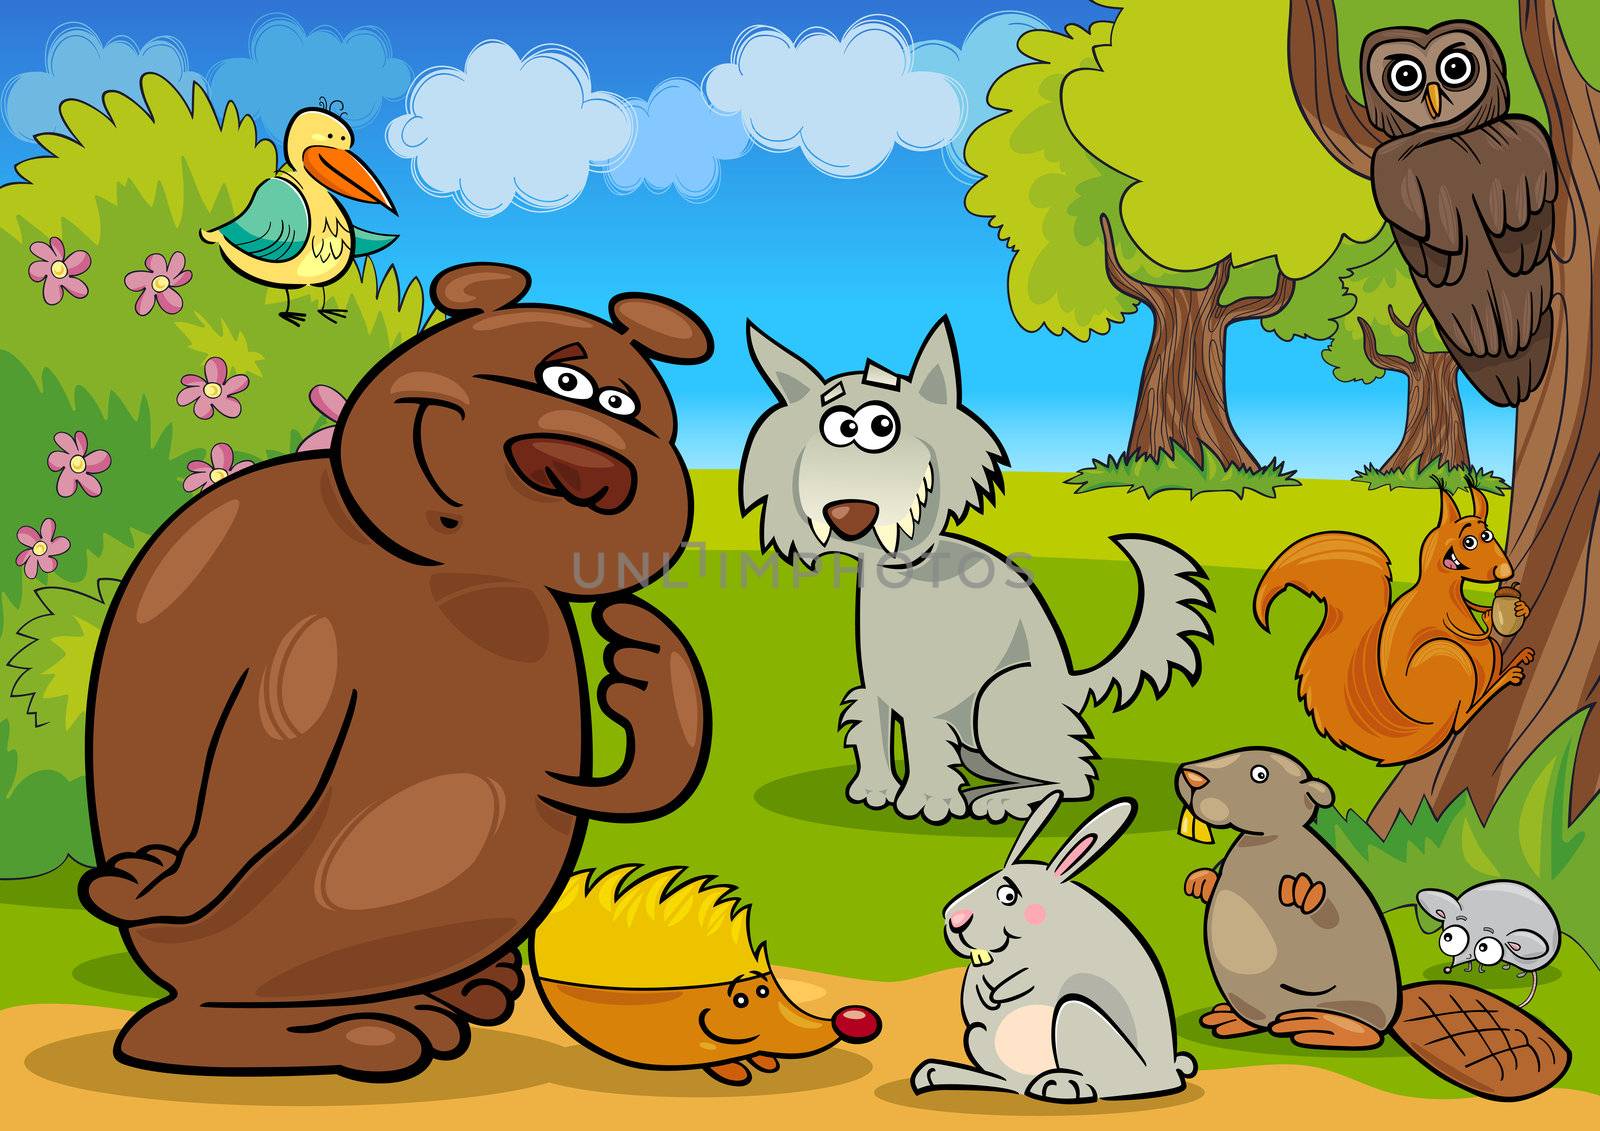 cartoon illustration of funny wild forest animals